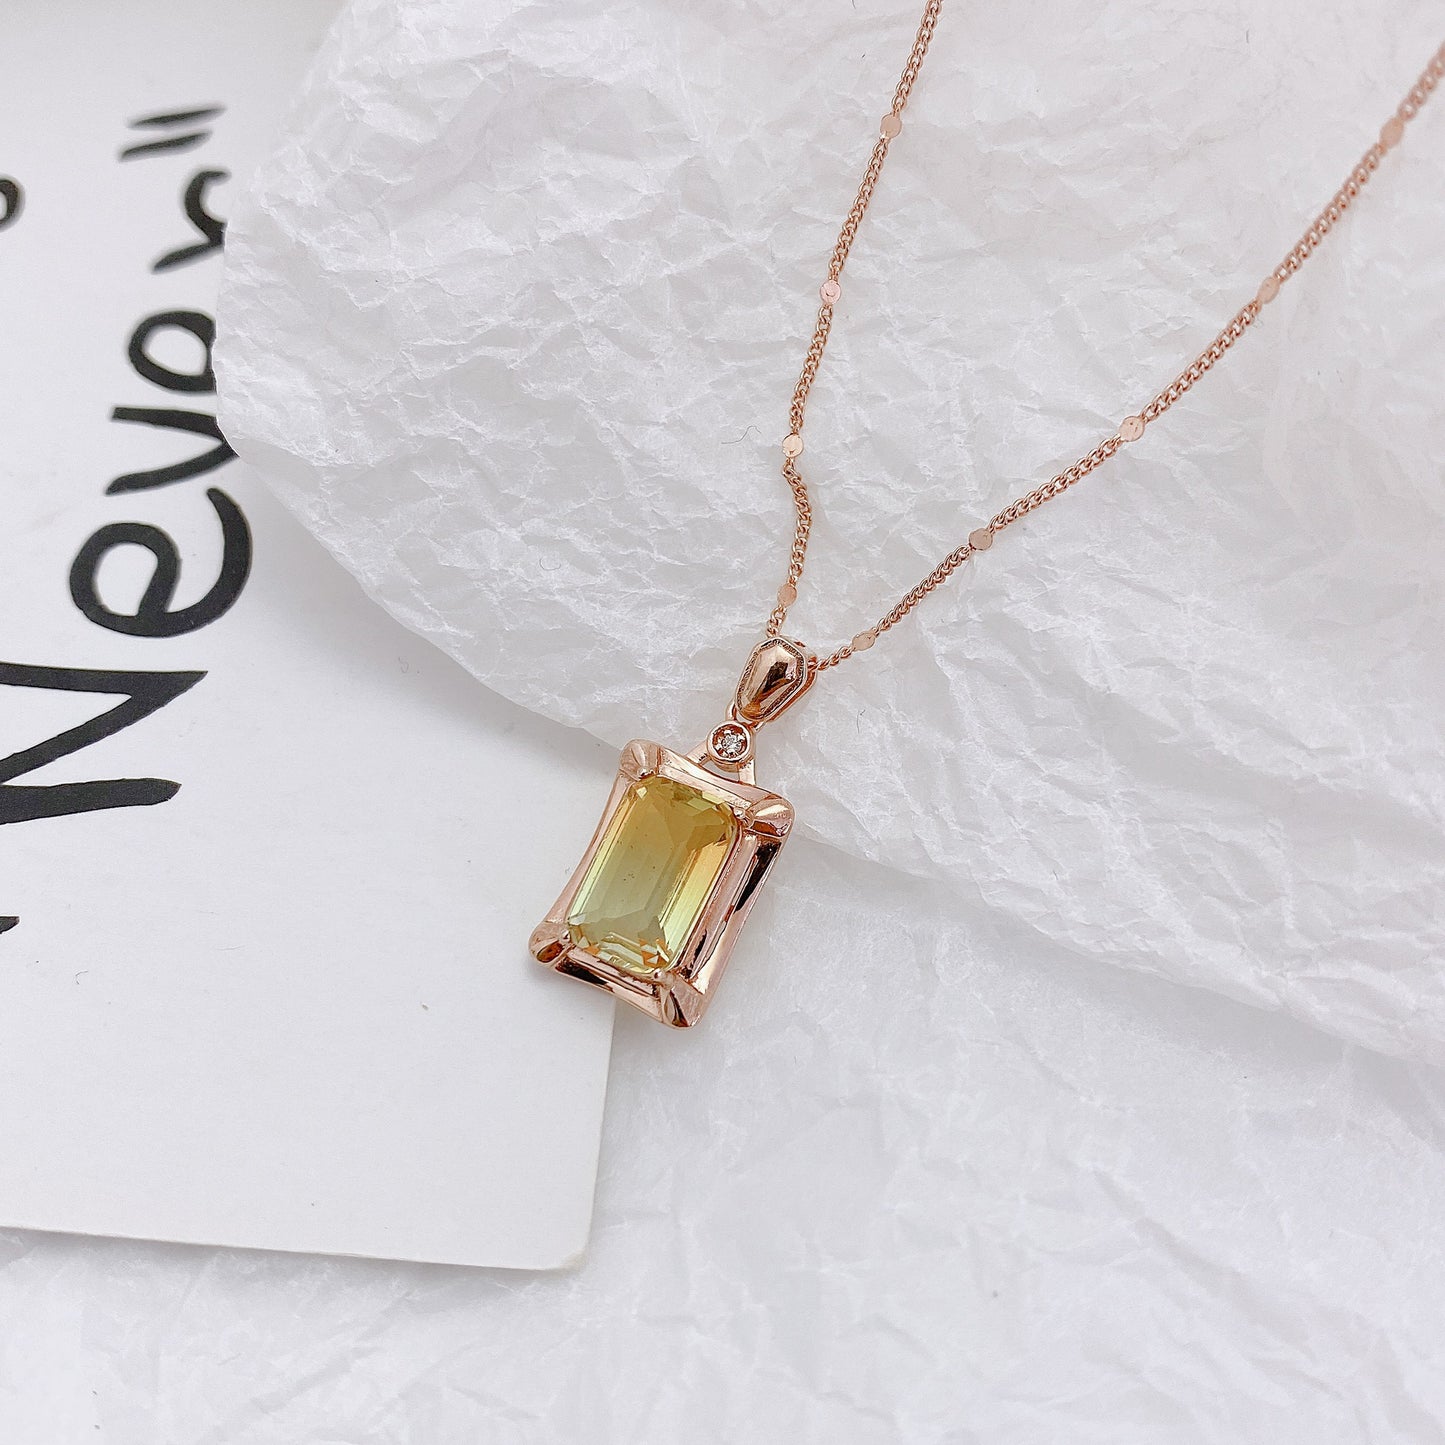 Emerald Cut Yellow Tourmaline Pendant Silver Necklace for Women